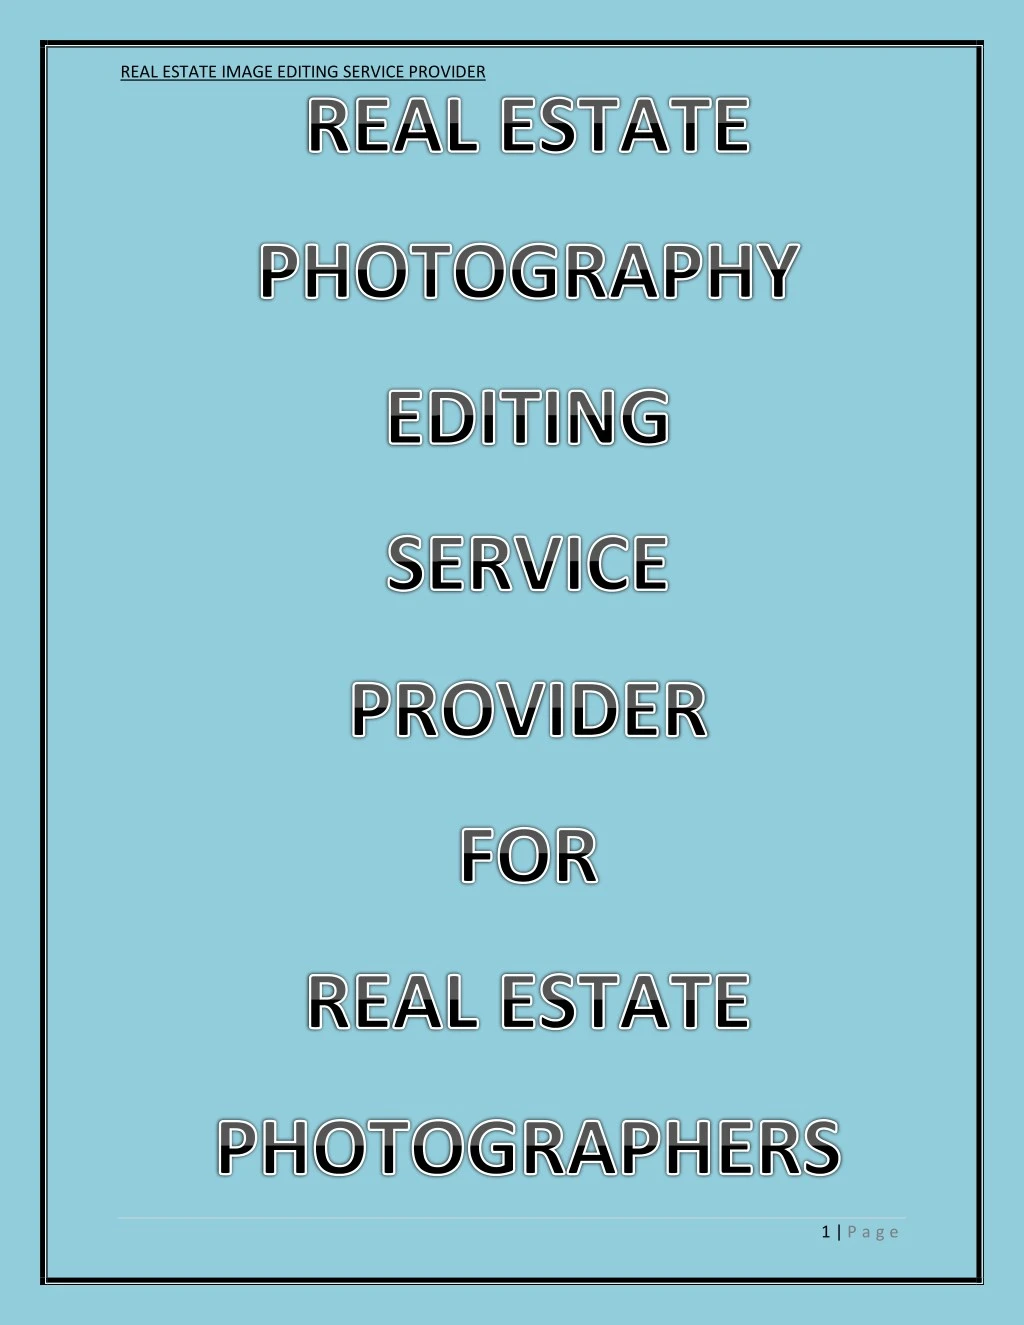 real estate image editing service provider n.